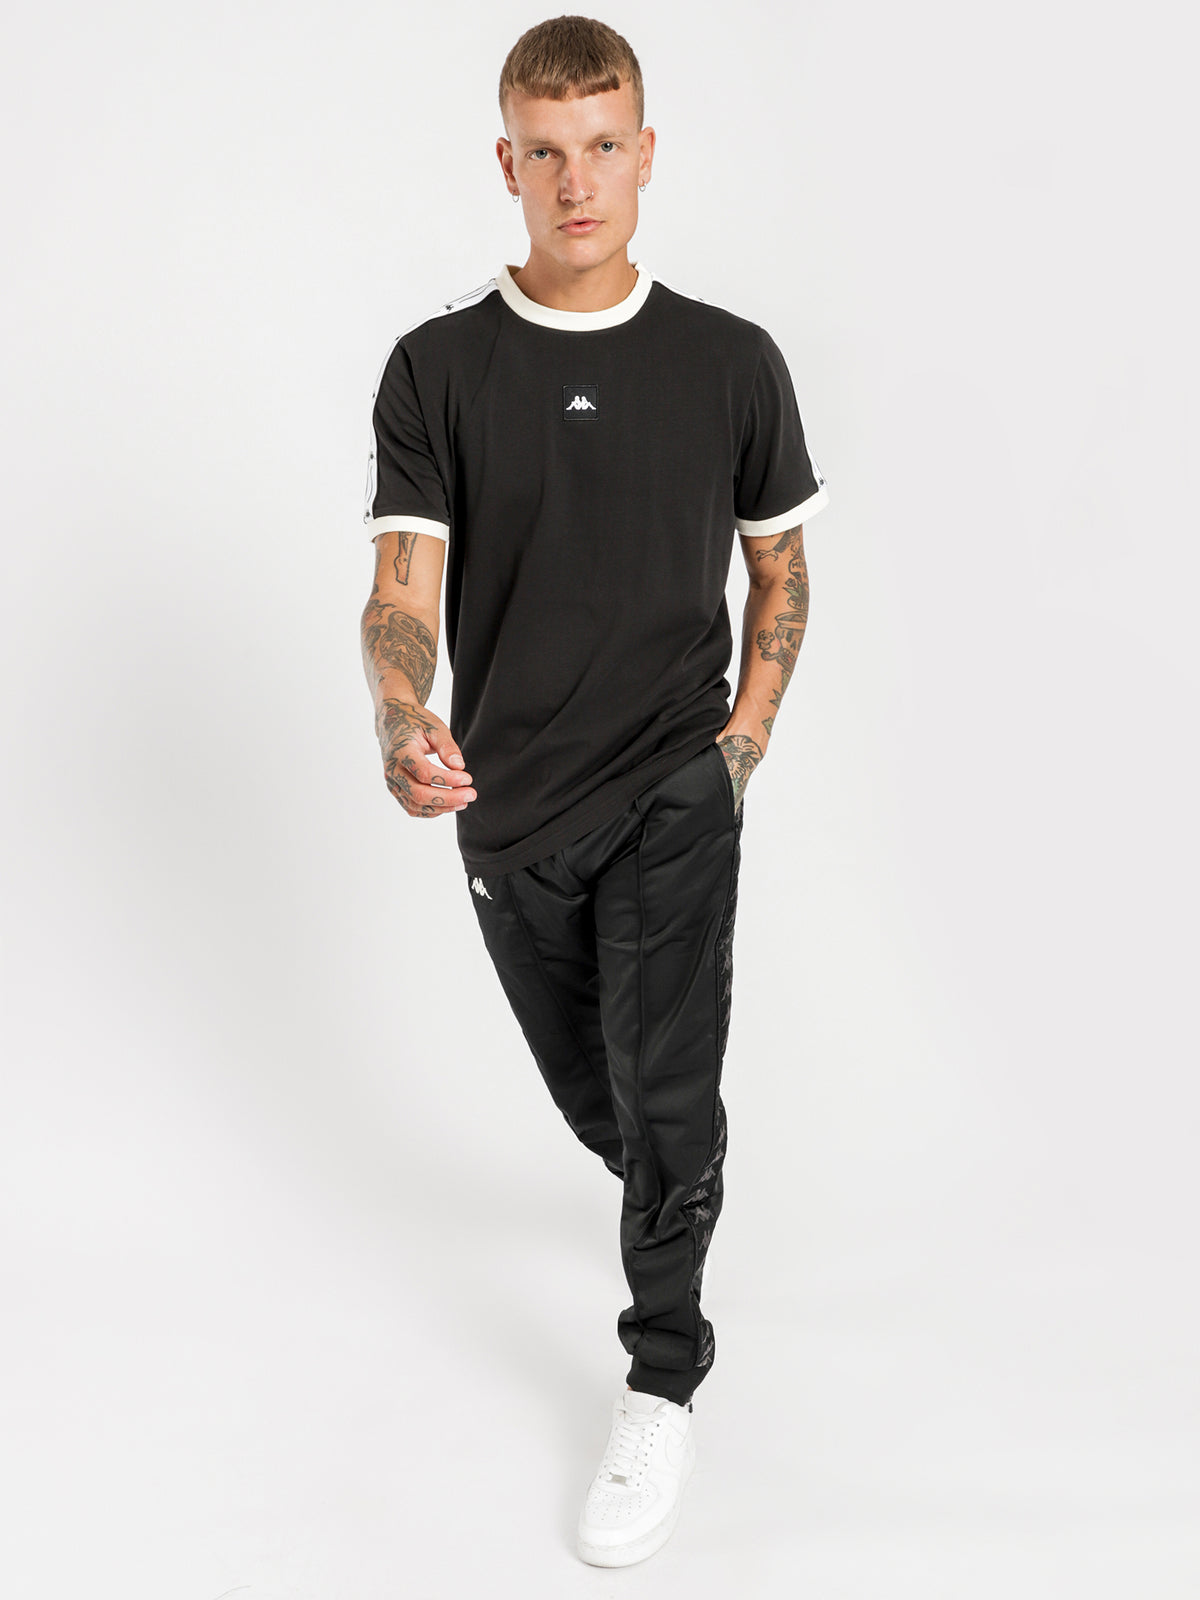 Authentic JPN Cymino T-Shirt in Black